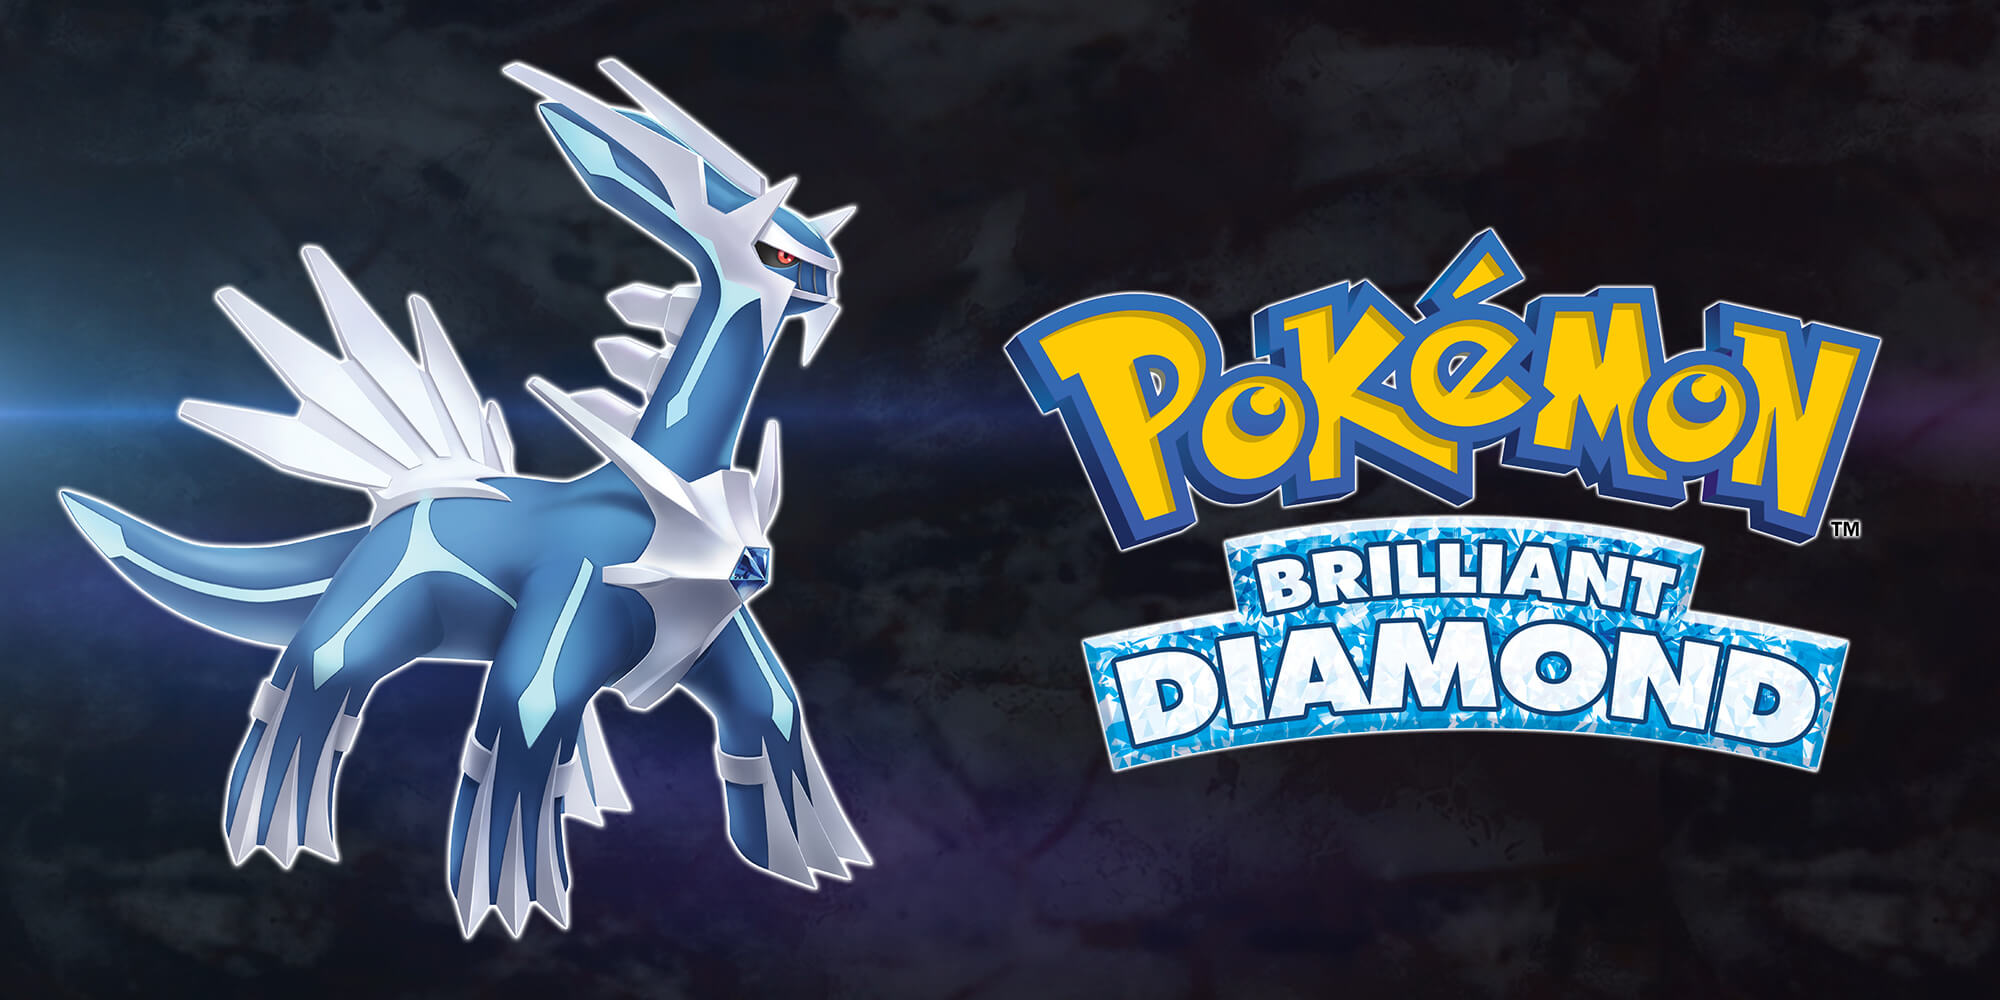 Pokémon Brilliant Diamond download pc - Console2PC